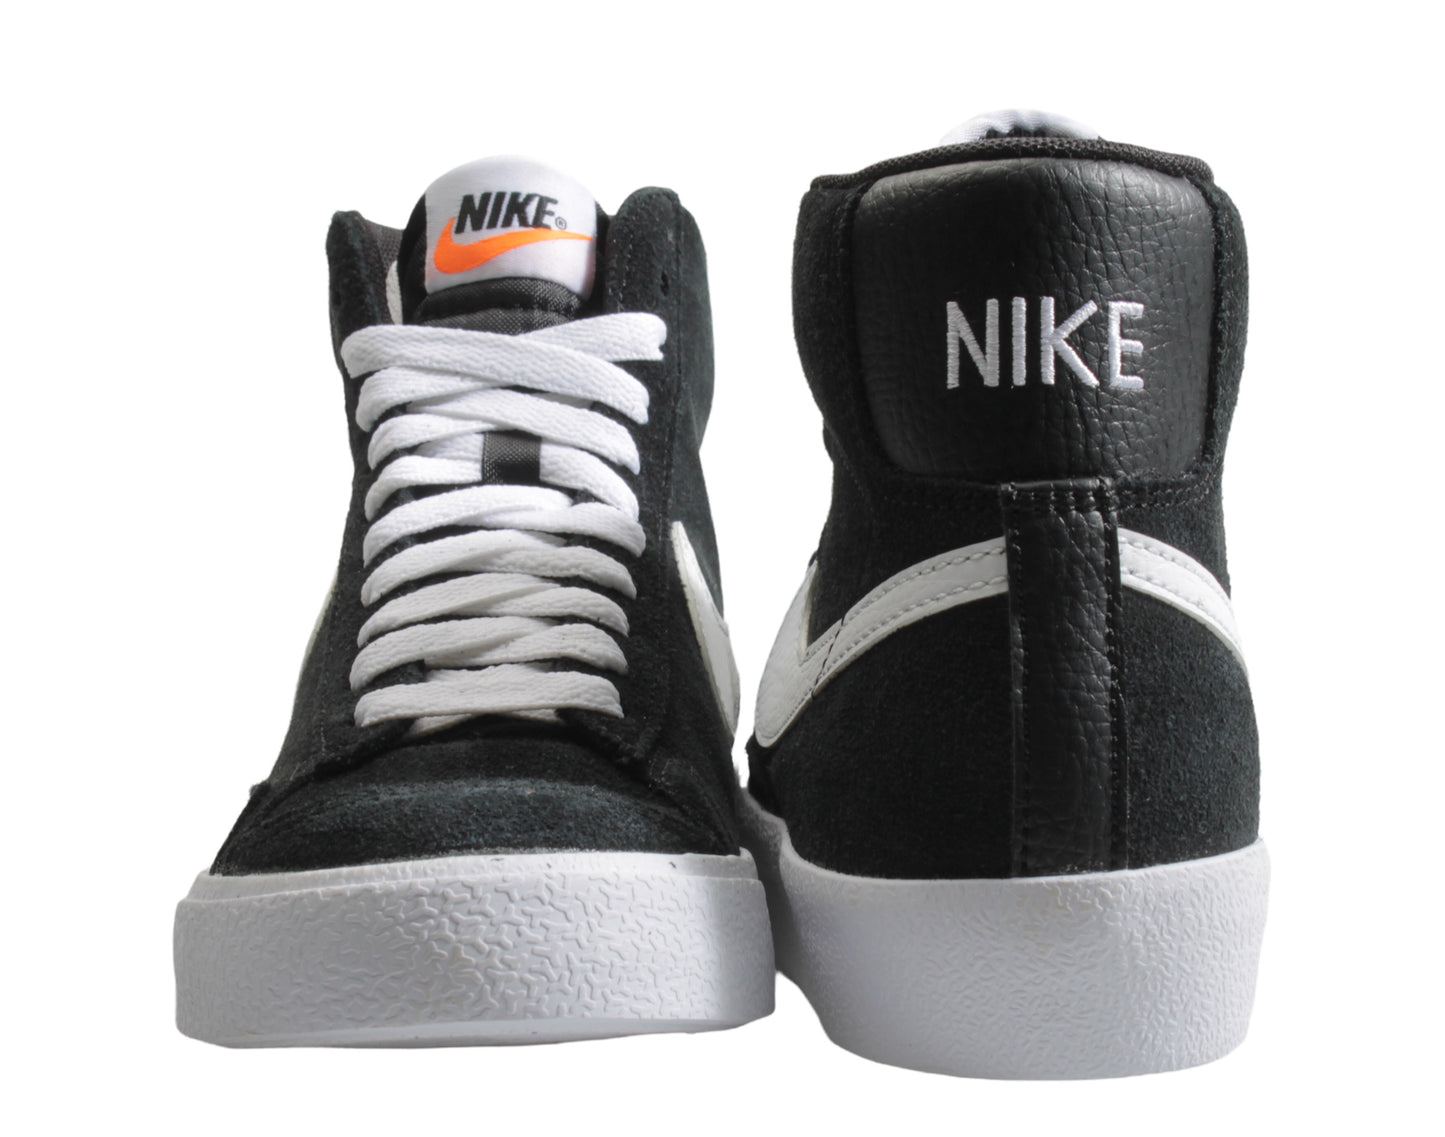 Nike Blazer Mid '77 Suede (GS) Big Kids Basketball Shoes